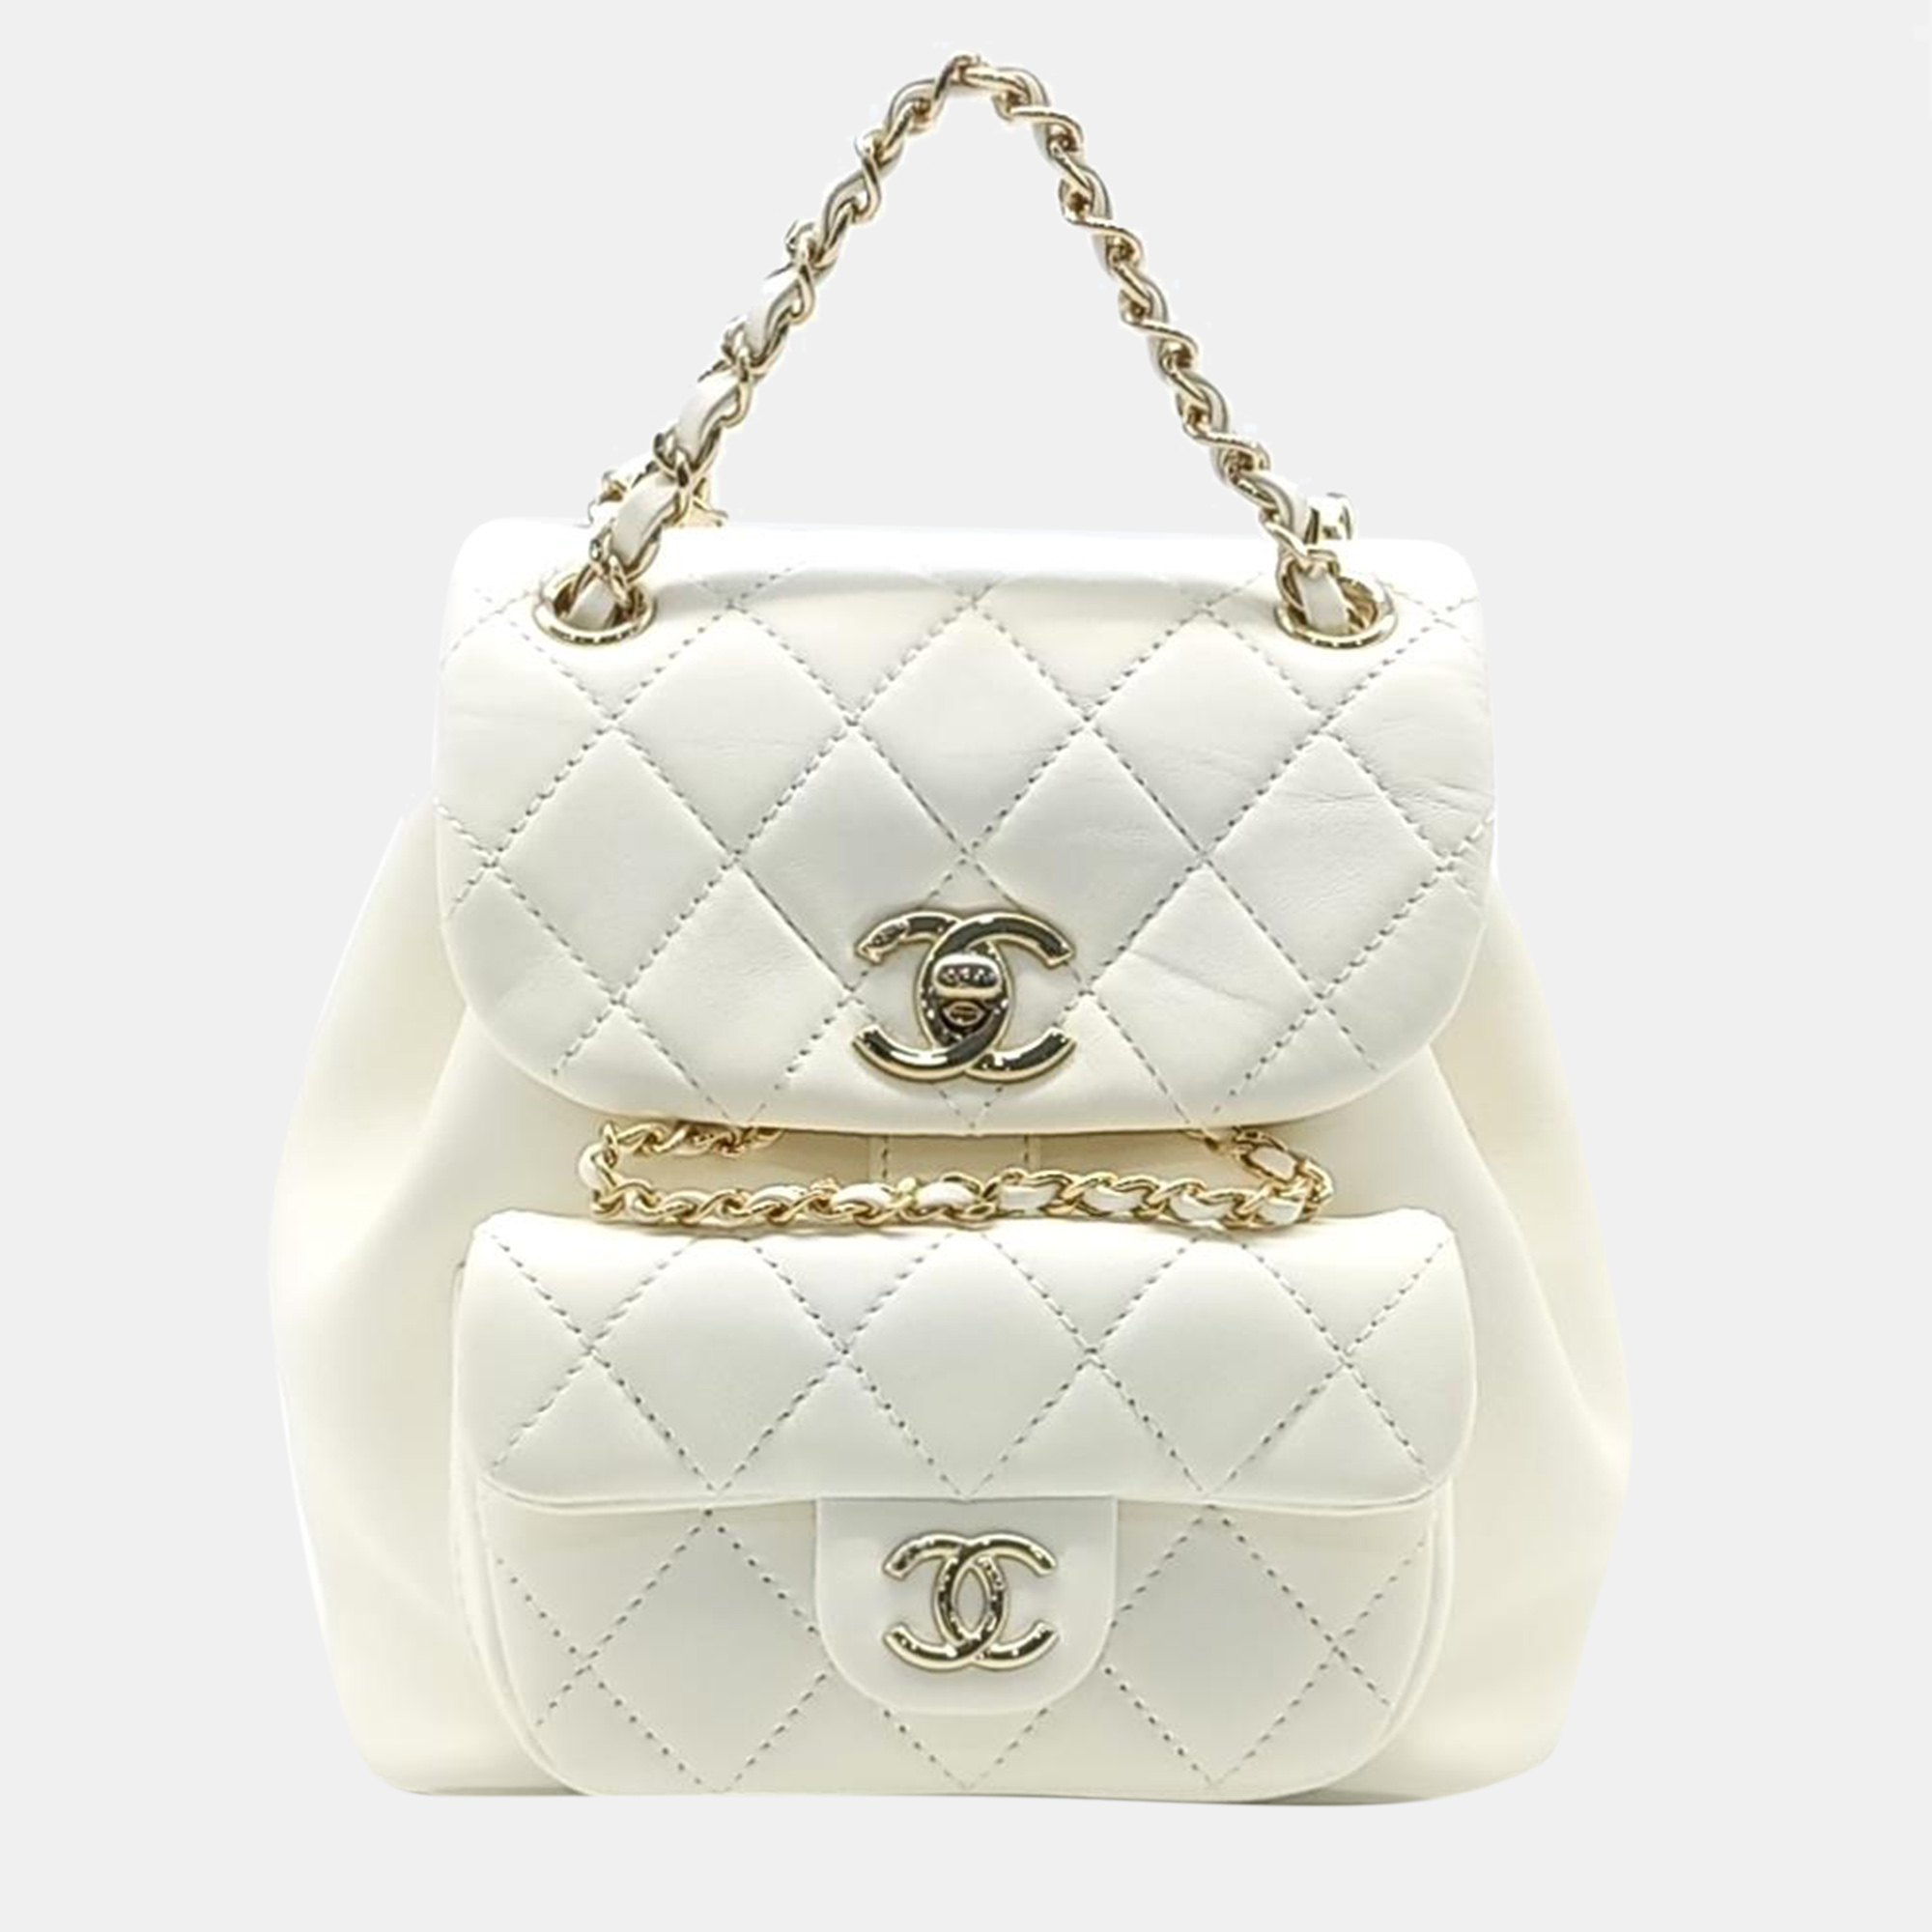 Chanel duma backpack